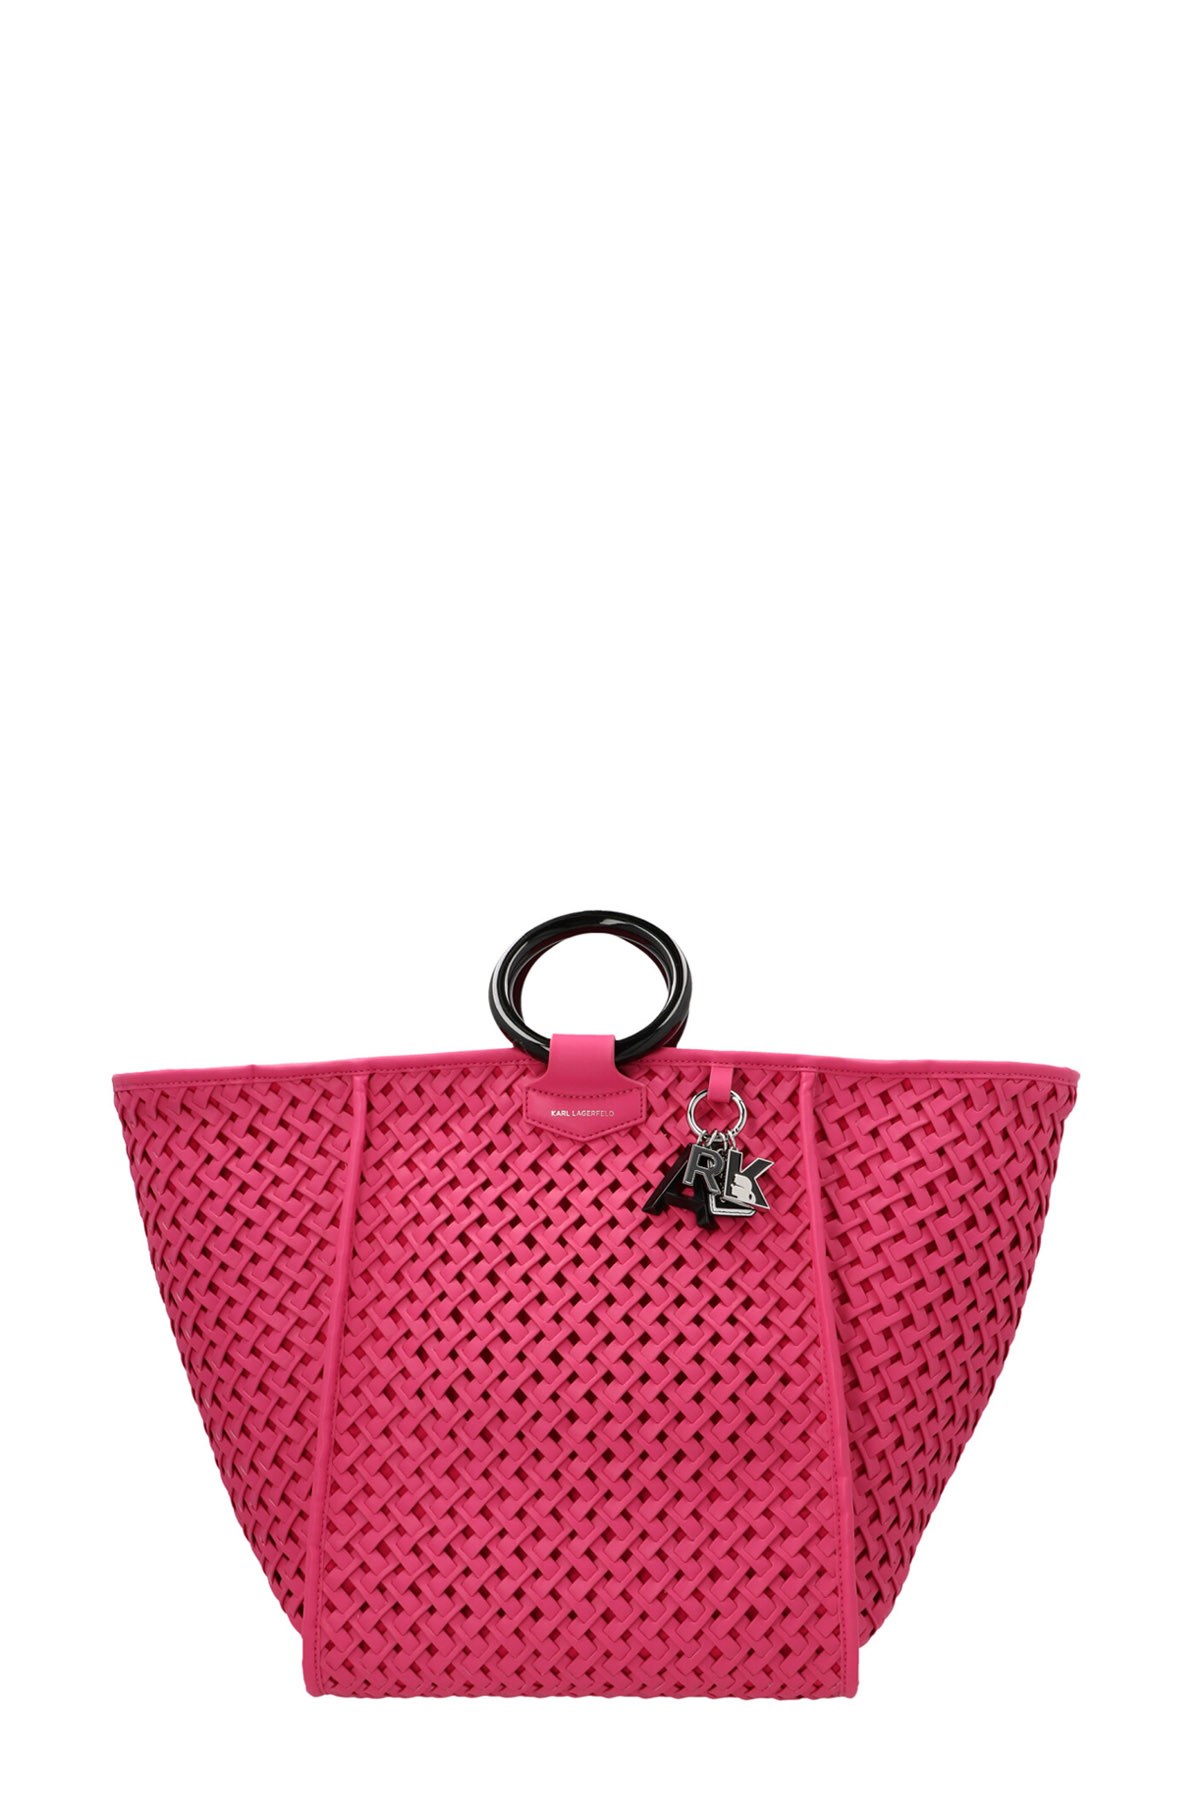 KARL LAGERFELD 'Basket Xl’ Shopping Bag